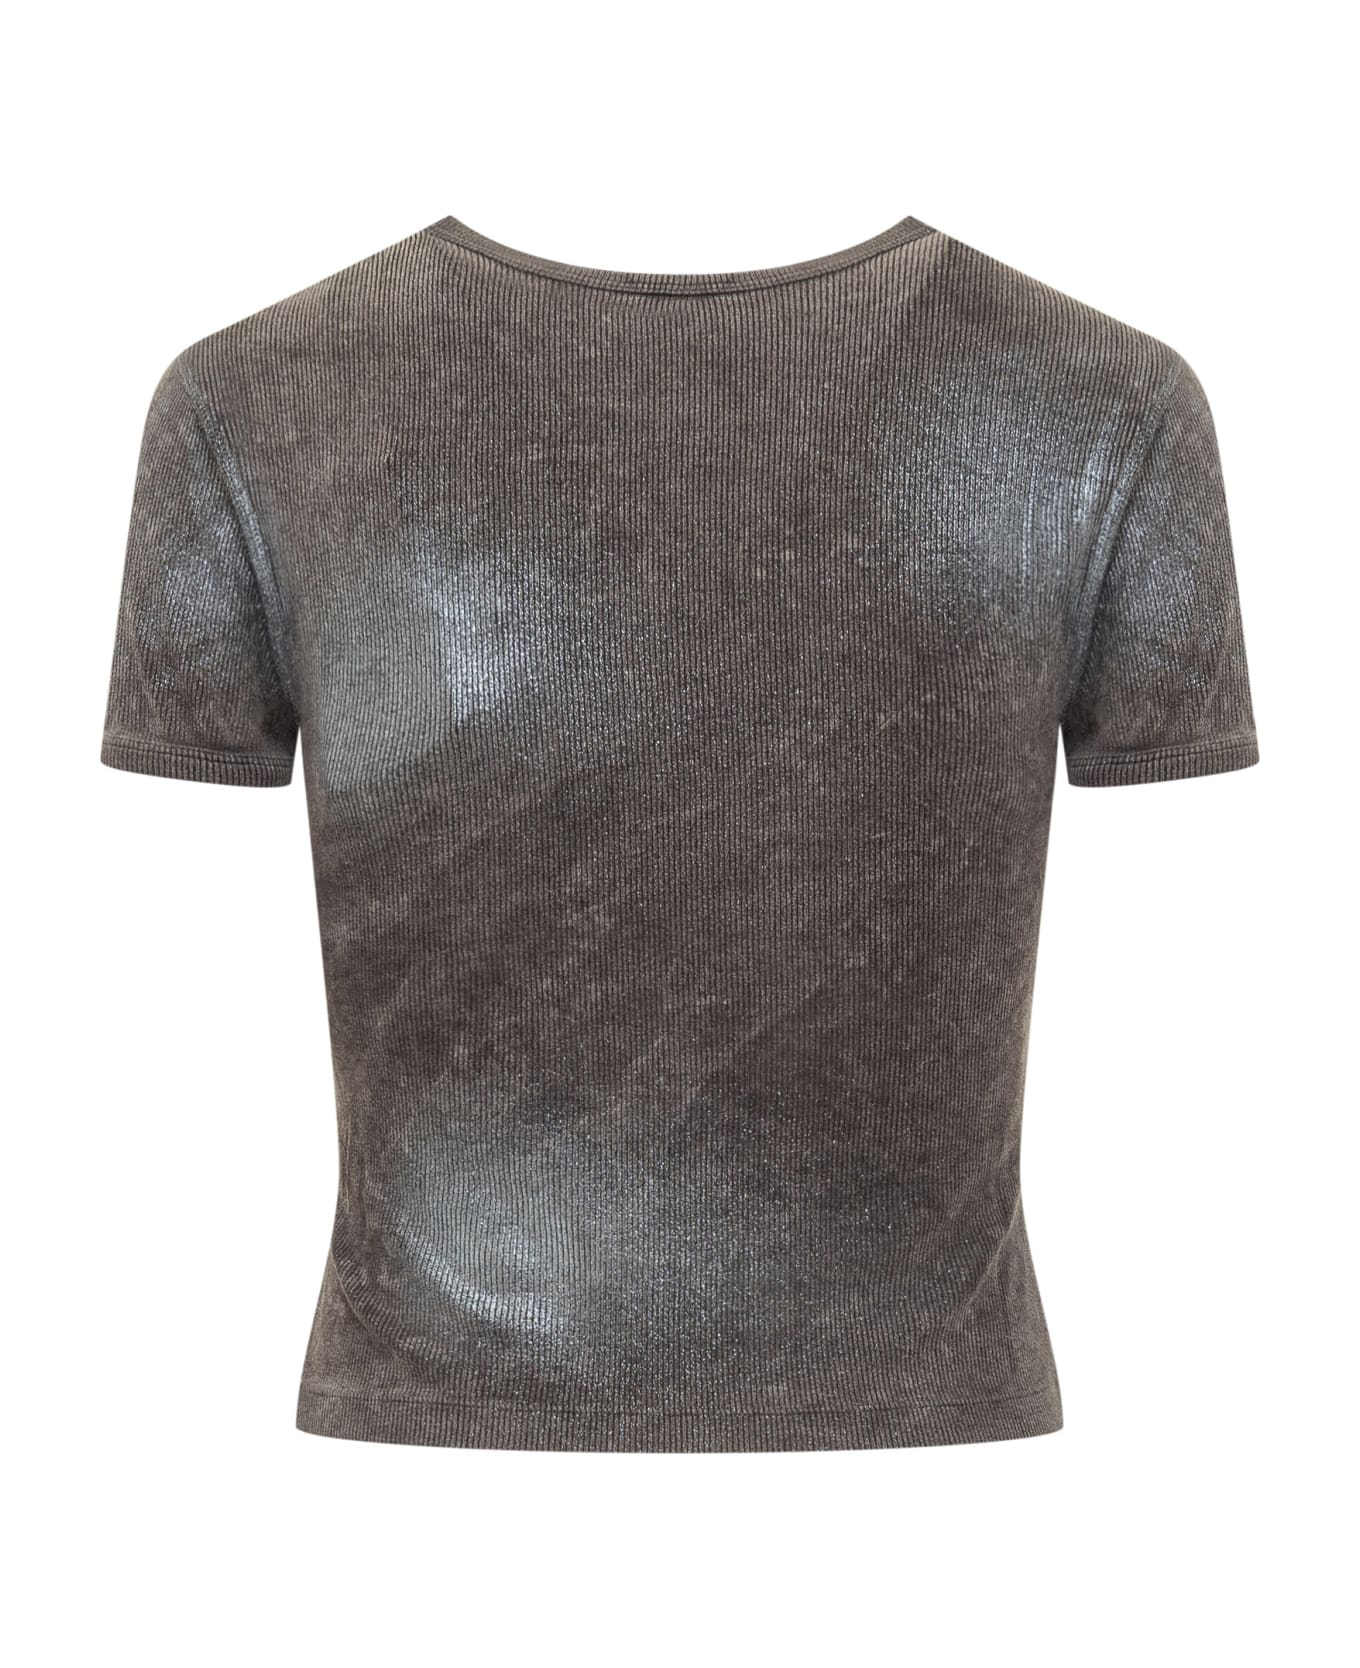 Diesel T-elen1 T-shirt - A Tシャツ